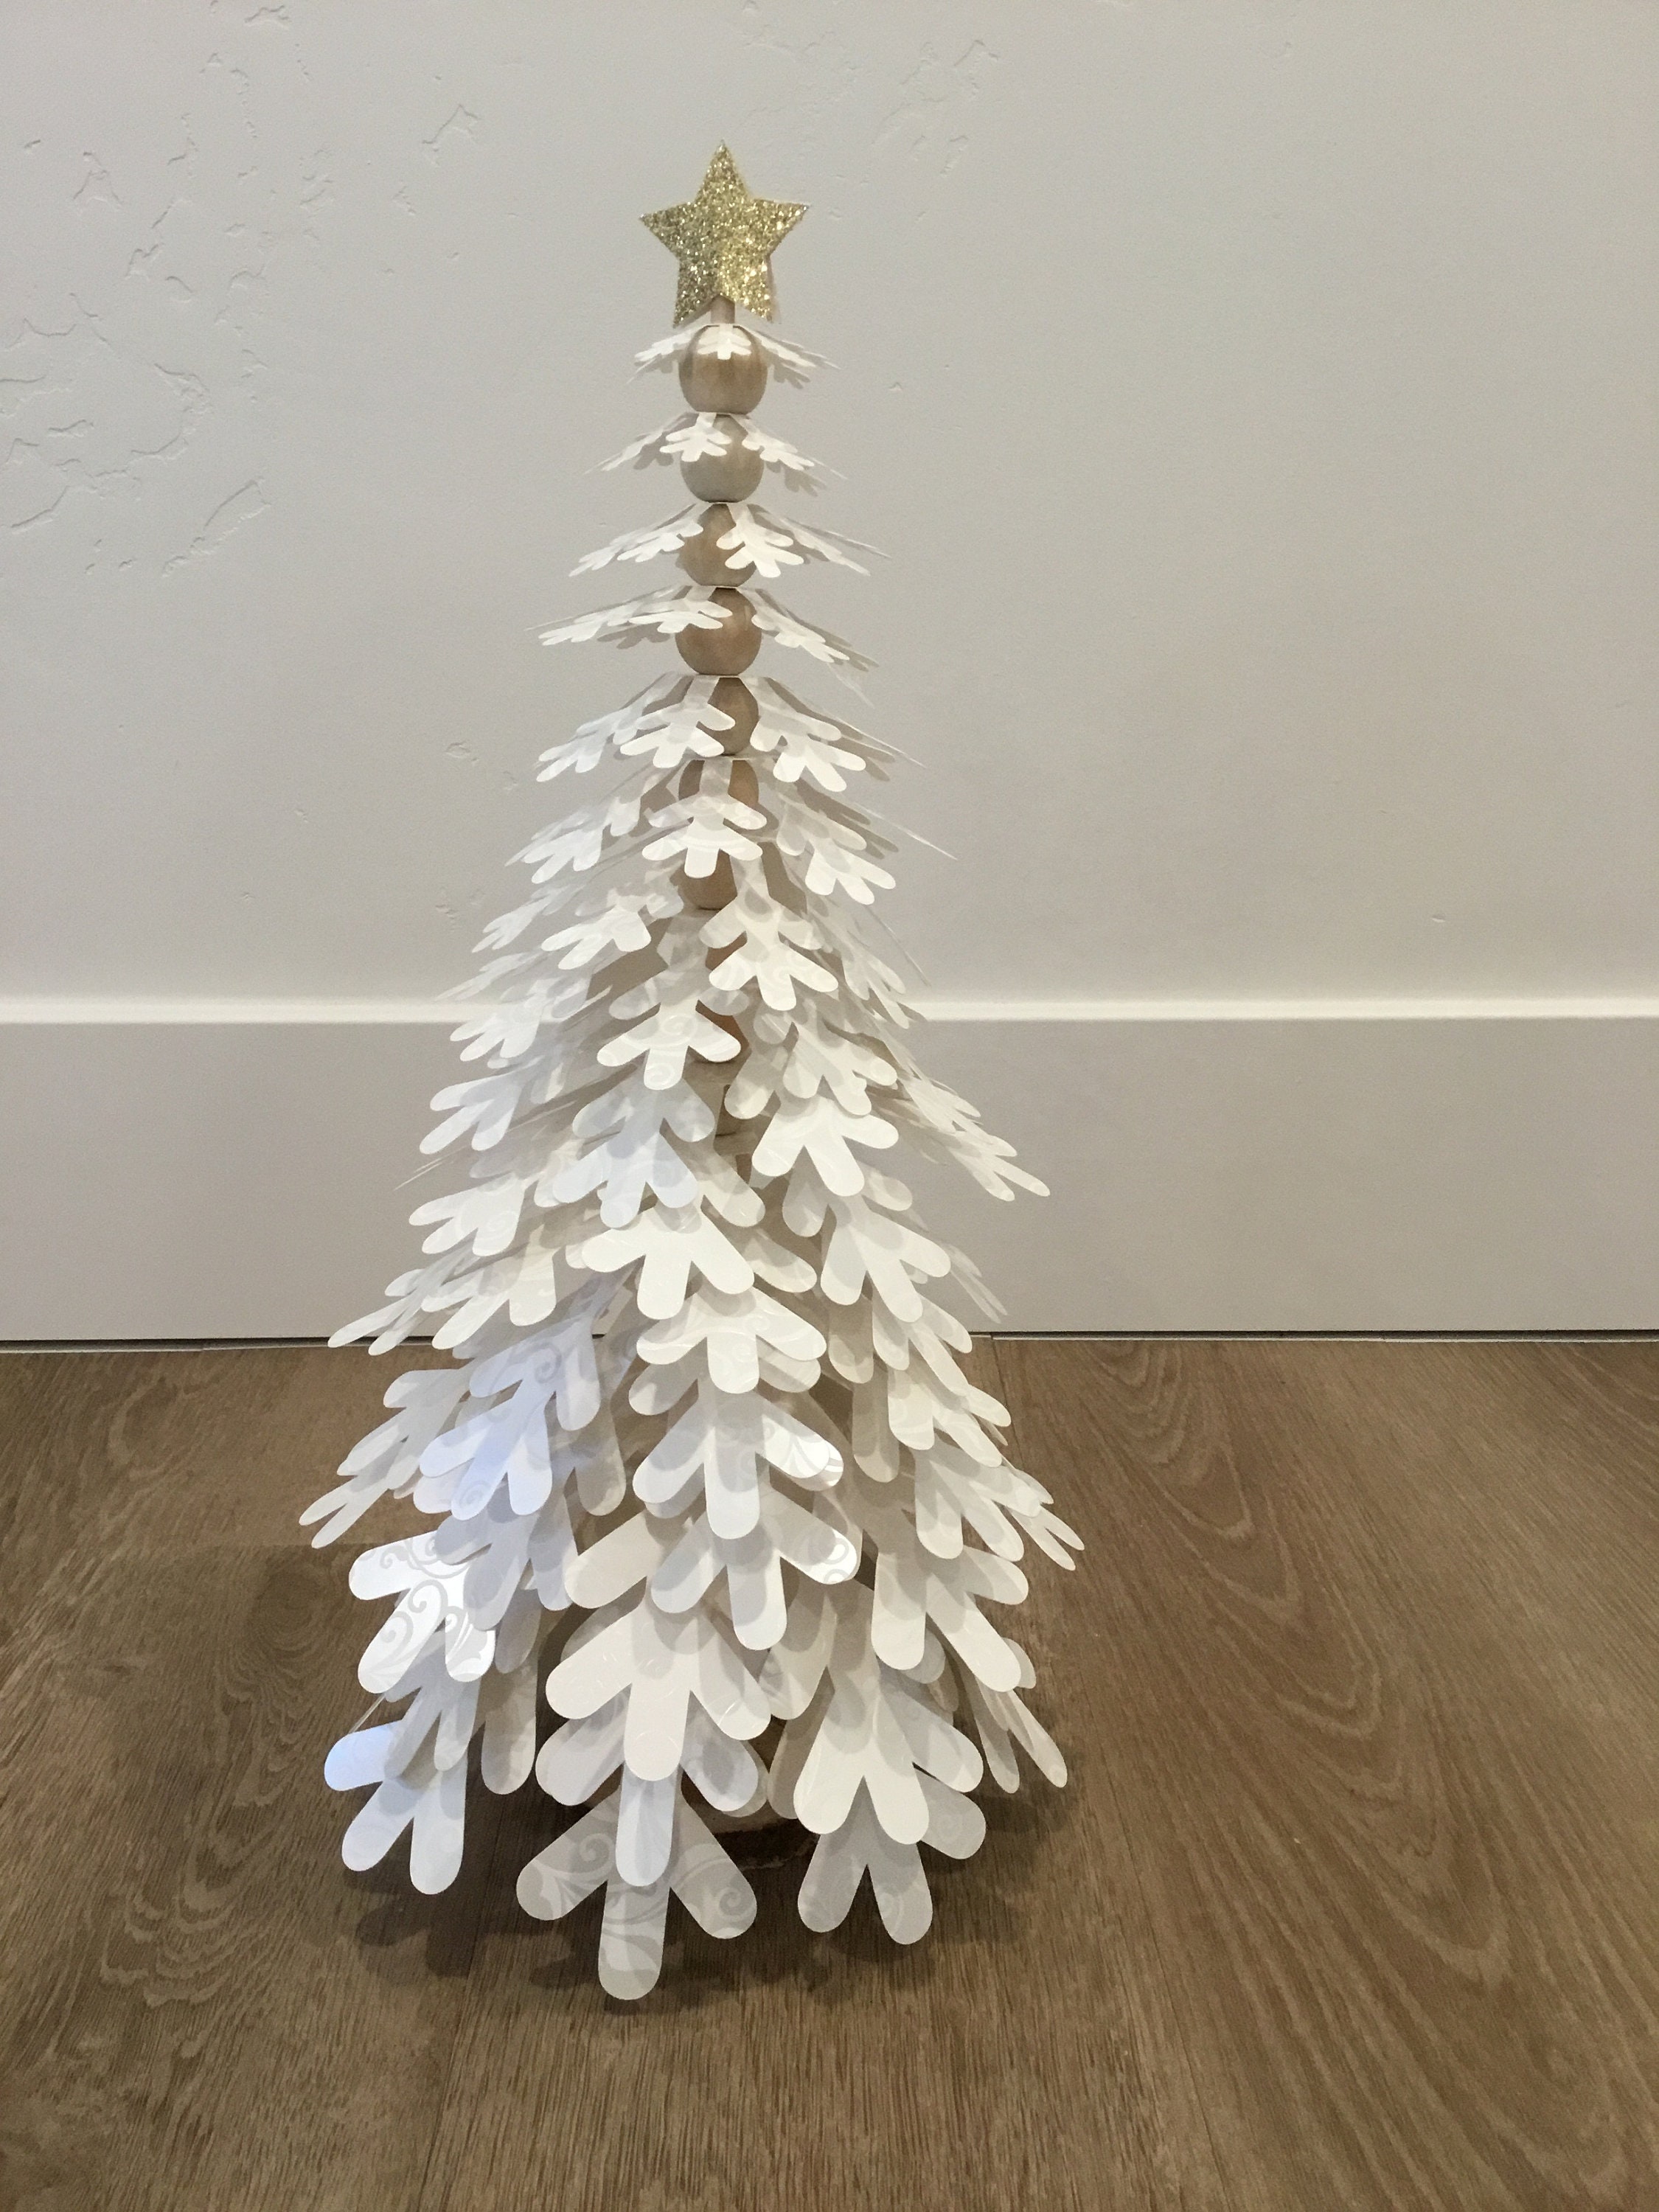 CraftyPals Felt Snowflake Ornament Kit DIY Xmas Decor With Tree